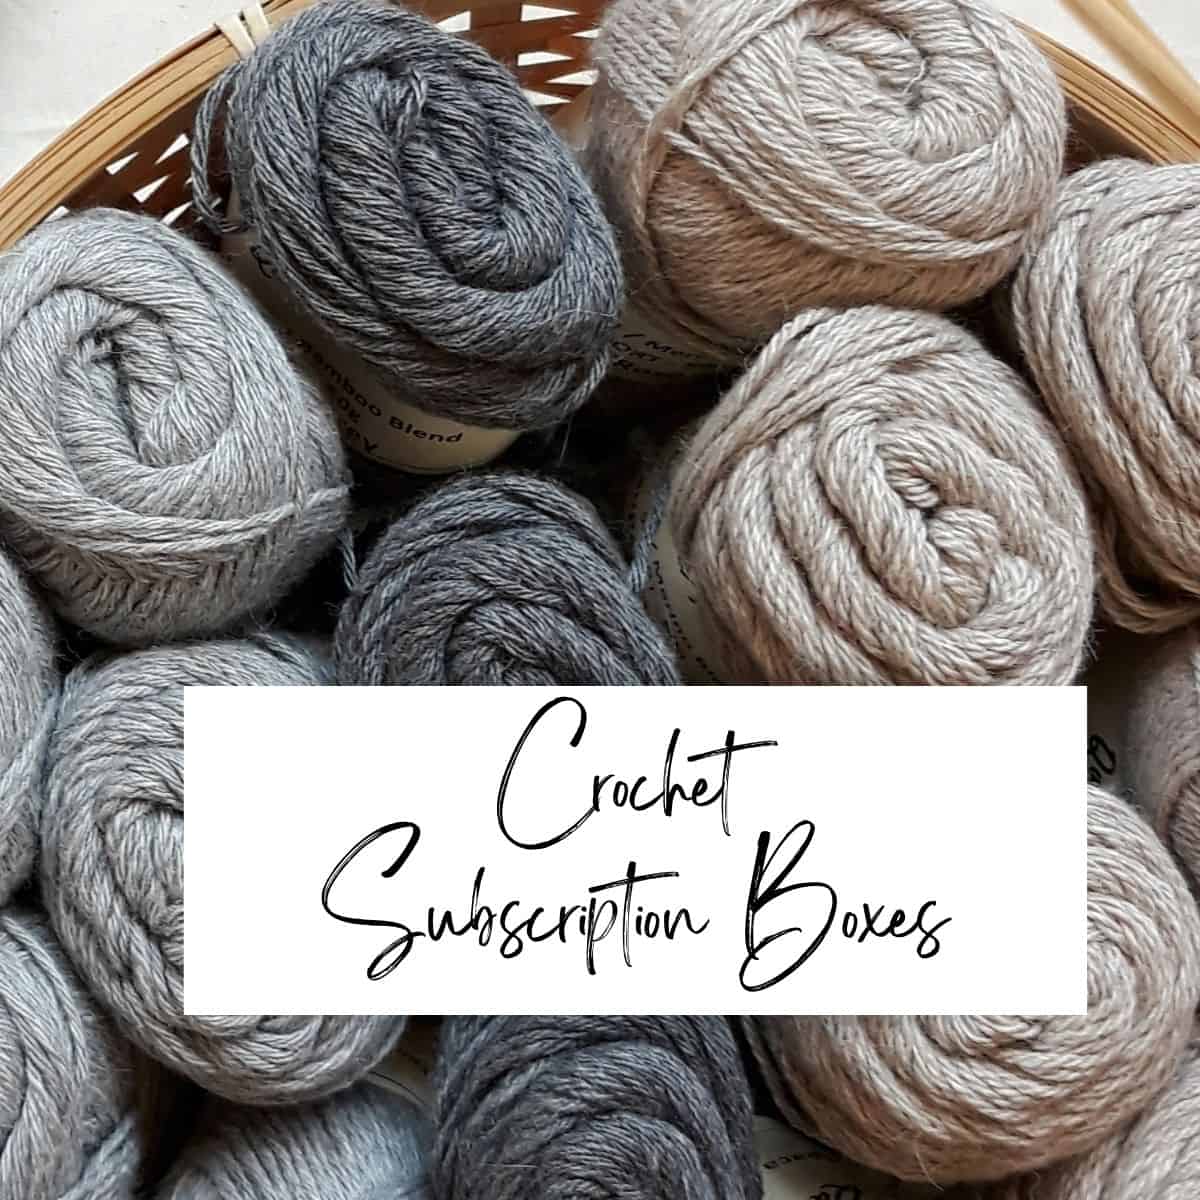 a box full of yarn for a crochet subscription box